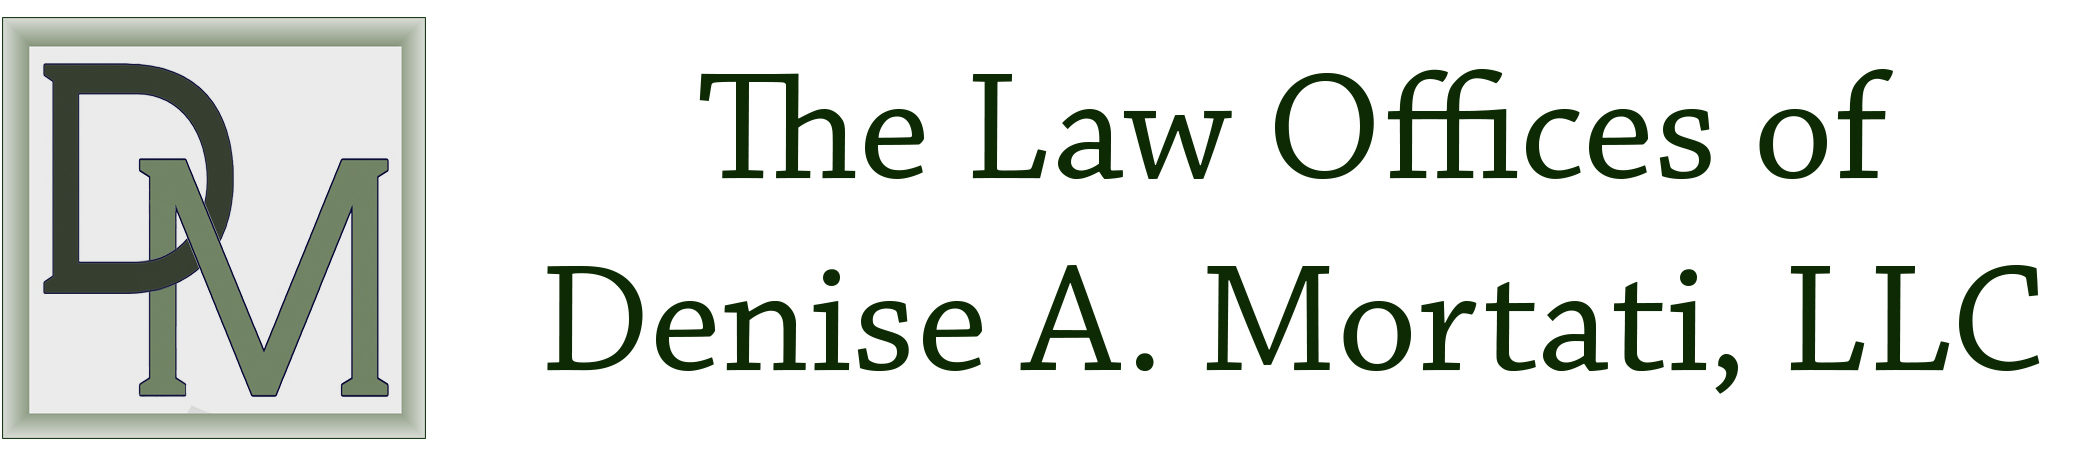 Law Offices of Denise A. Mortati, LLC